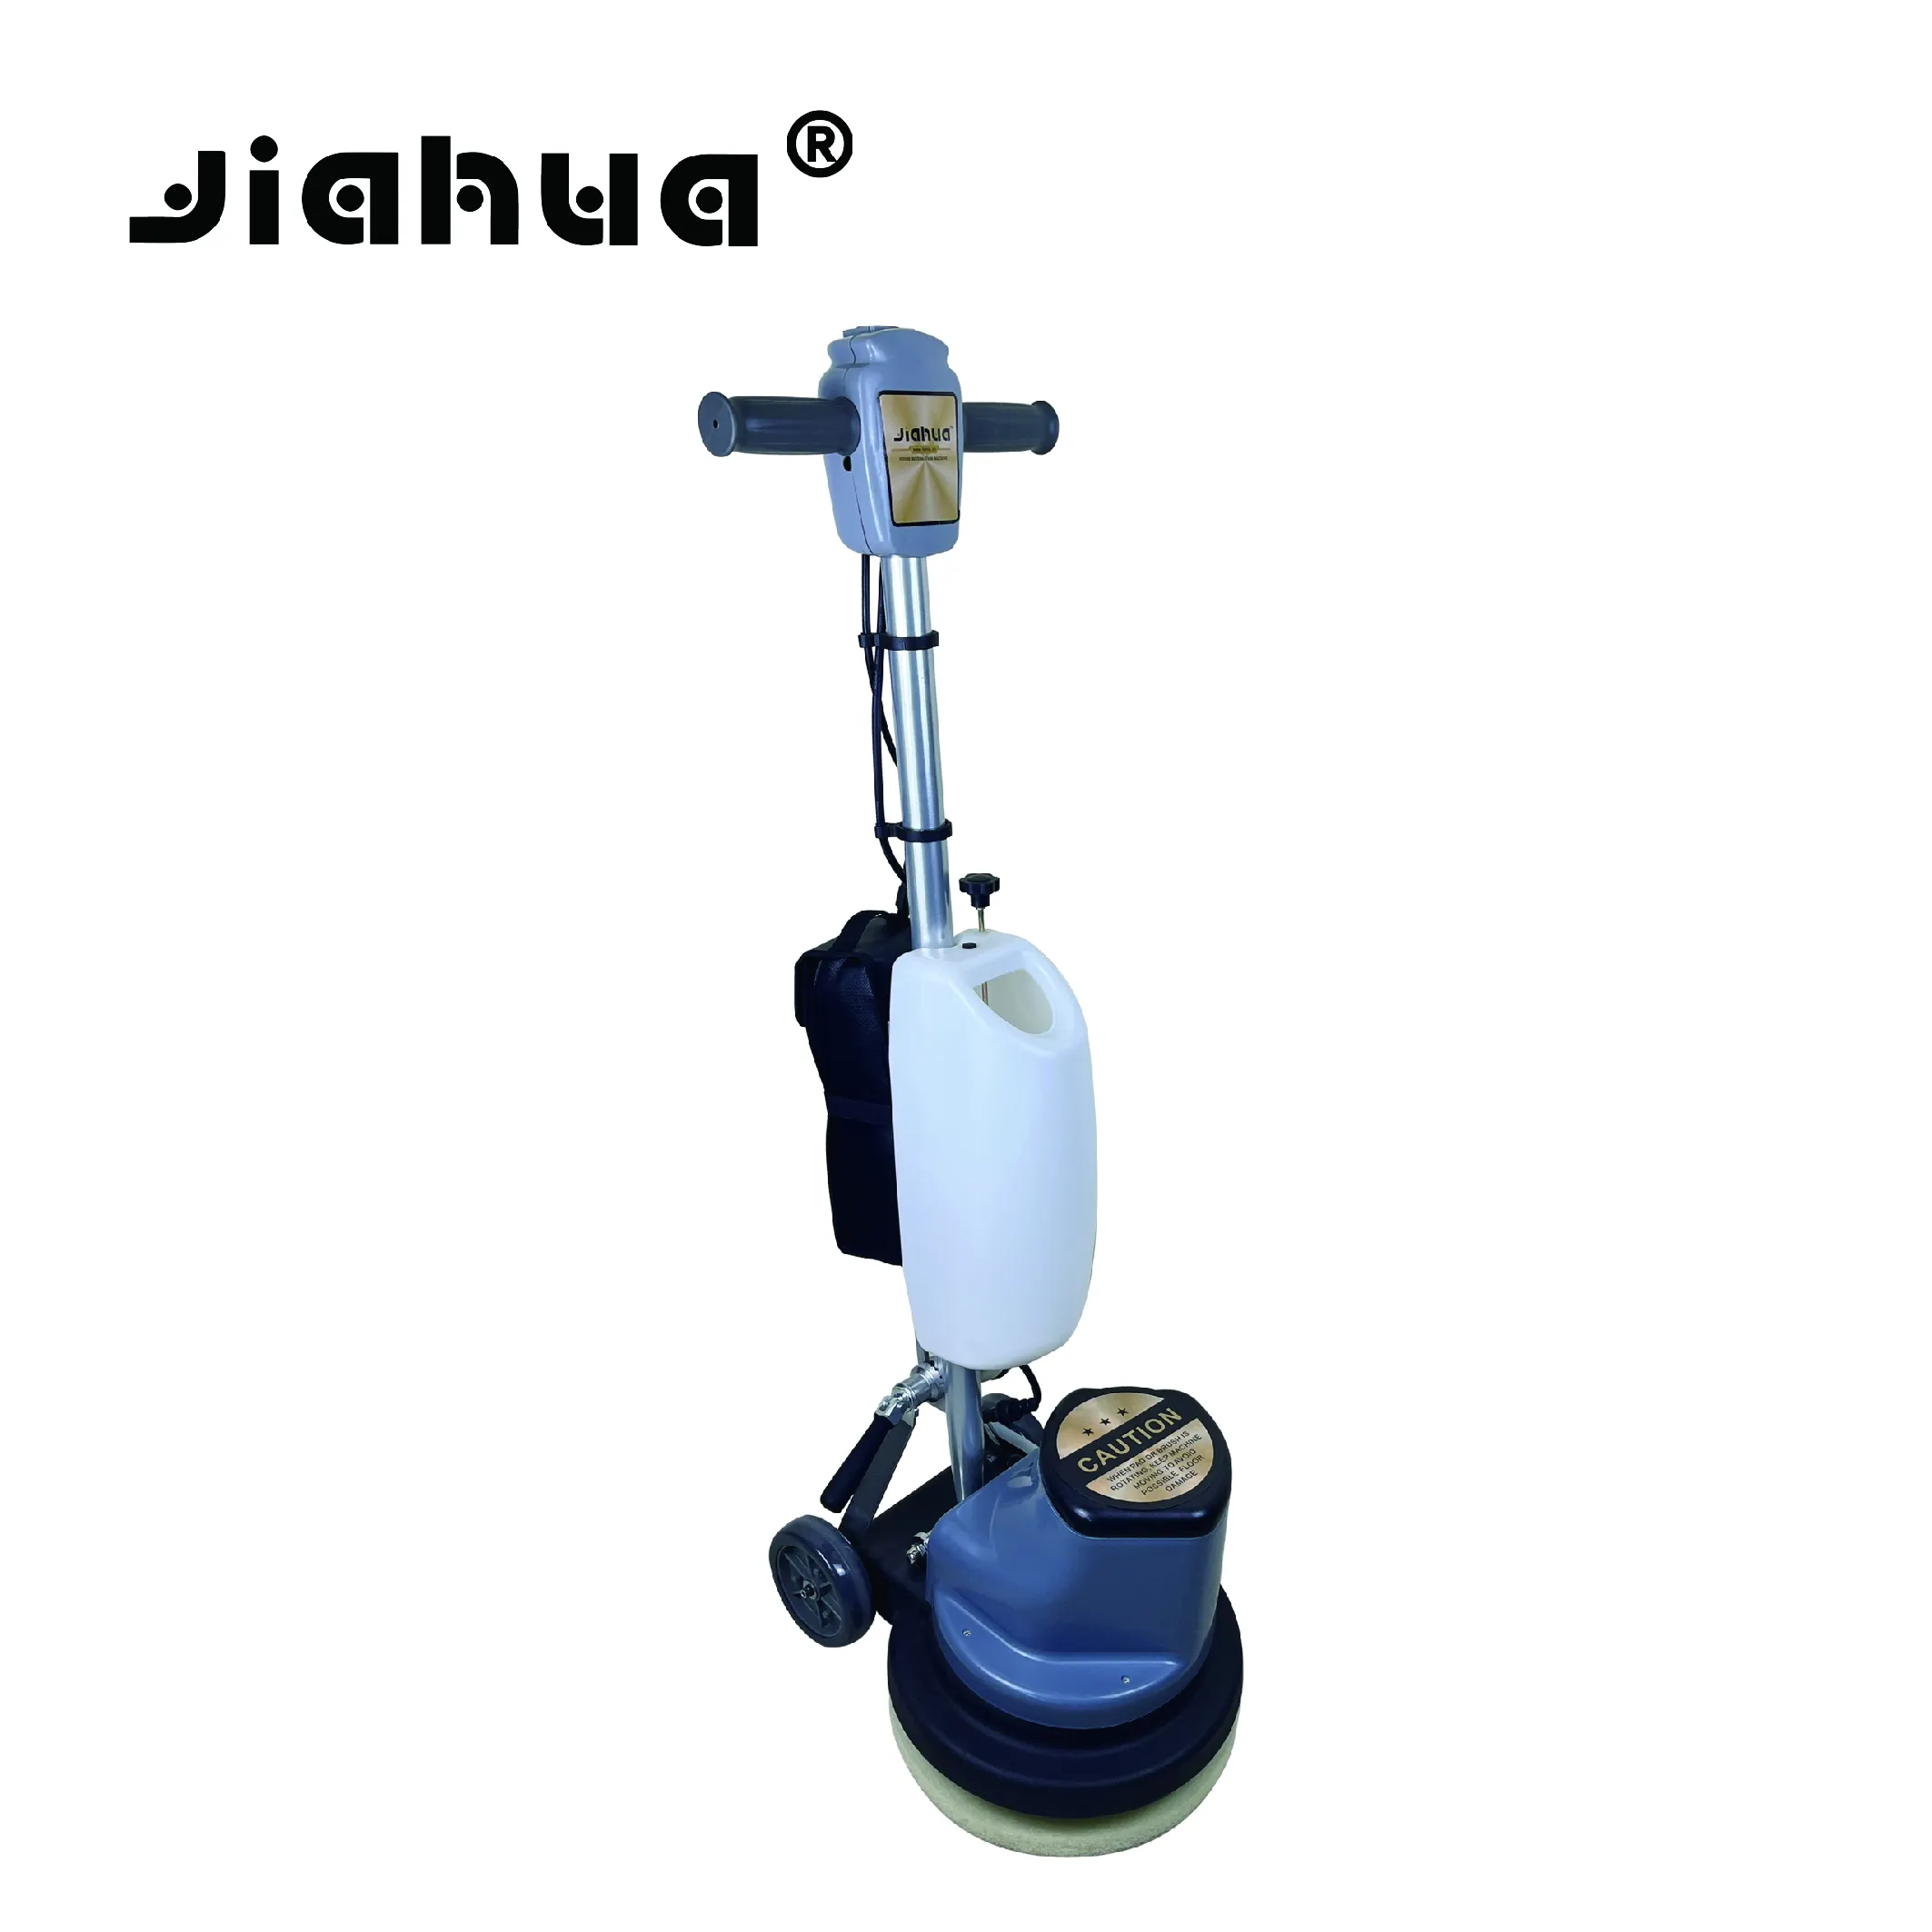 Jiahua carpet cleaning machine floor sweeper battery operated floor cleaning machine marble and granite